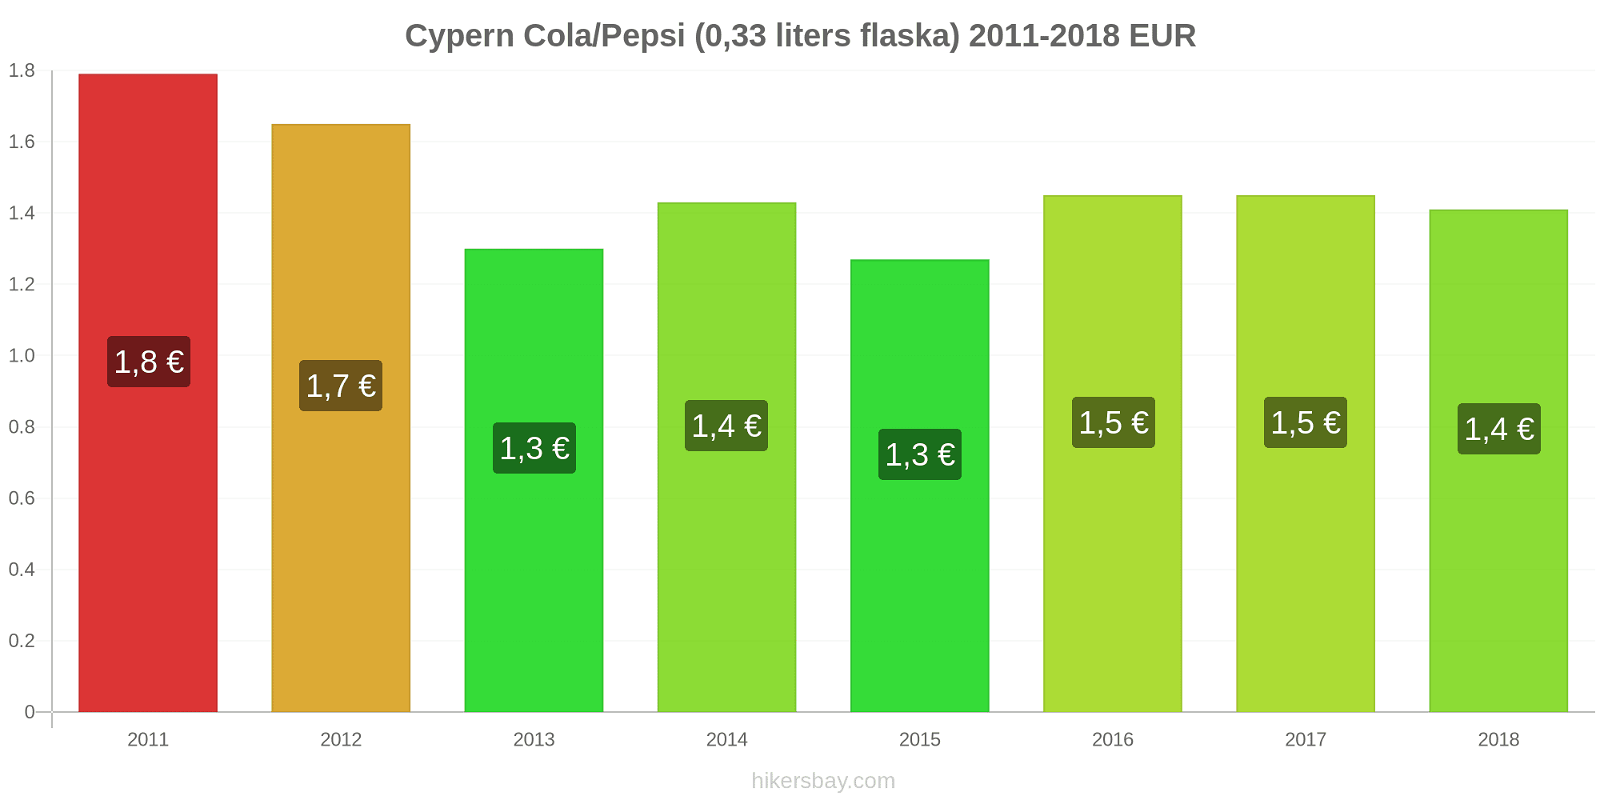 Cypern prisändringar Coca-Cola/Pepsi (0.33 liters flaska) hikersbay.com